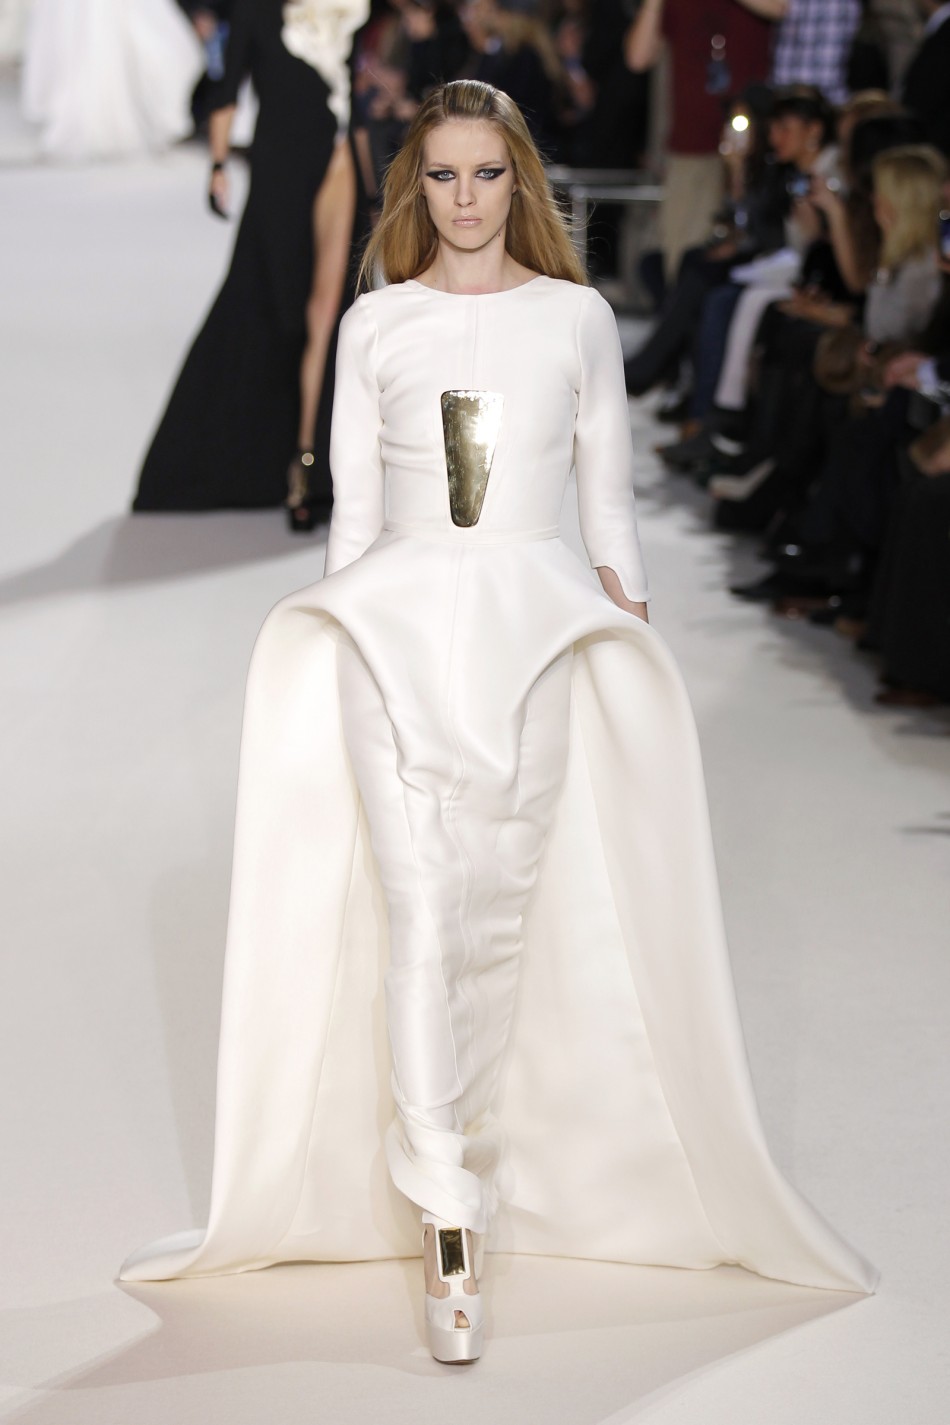 Paris Fashion Week: 50 Kg Dress for Stéphane Rolland's Couture Show ...